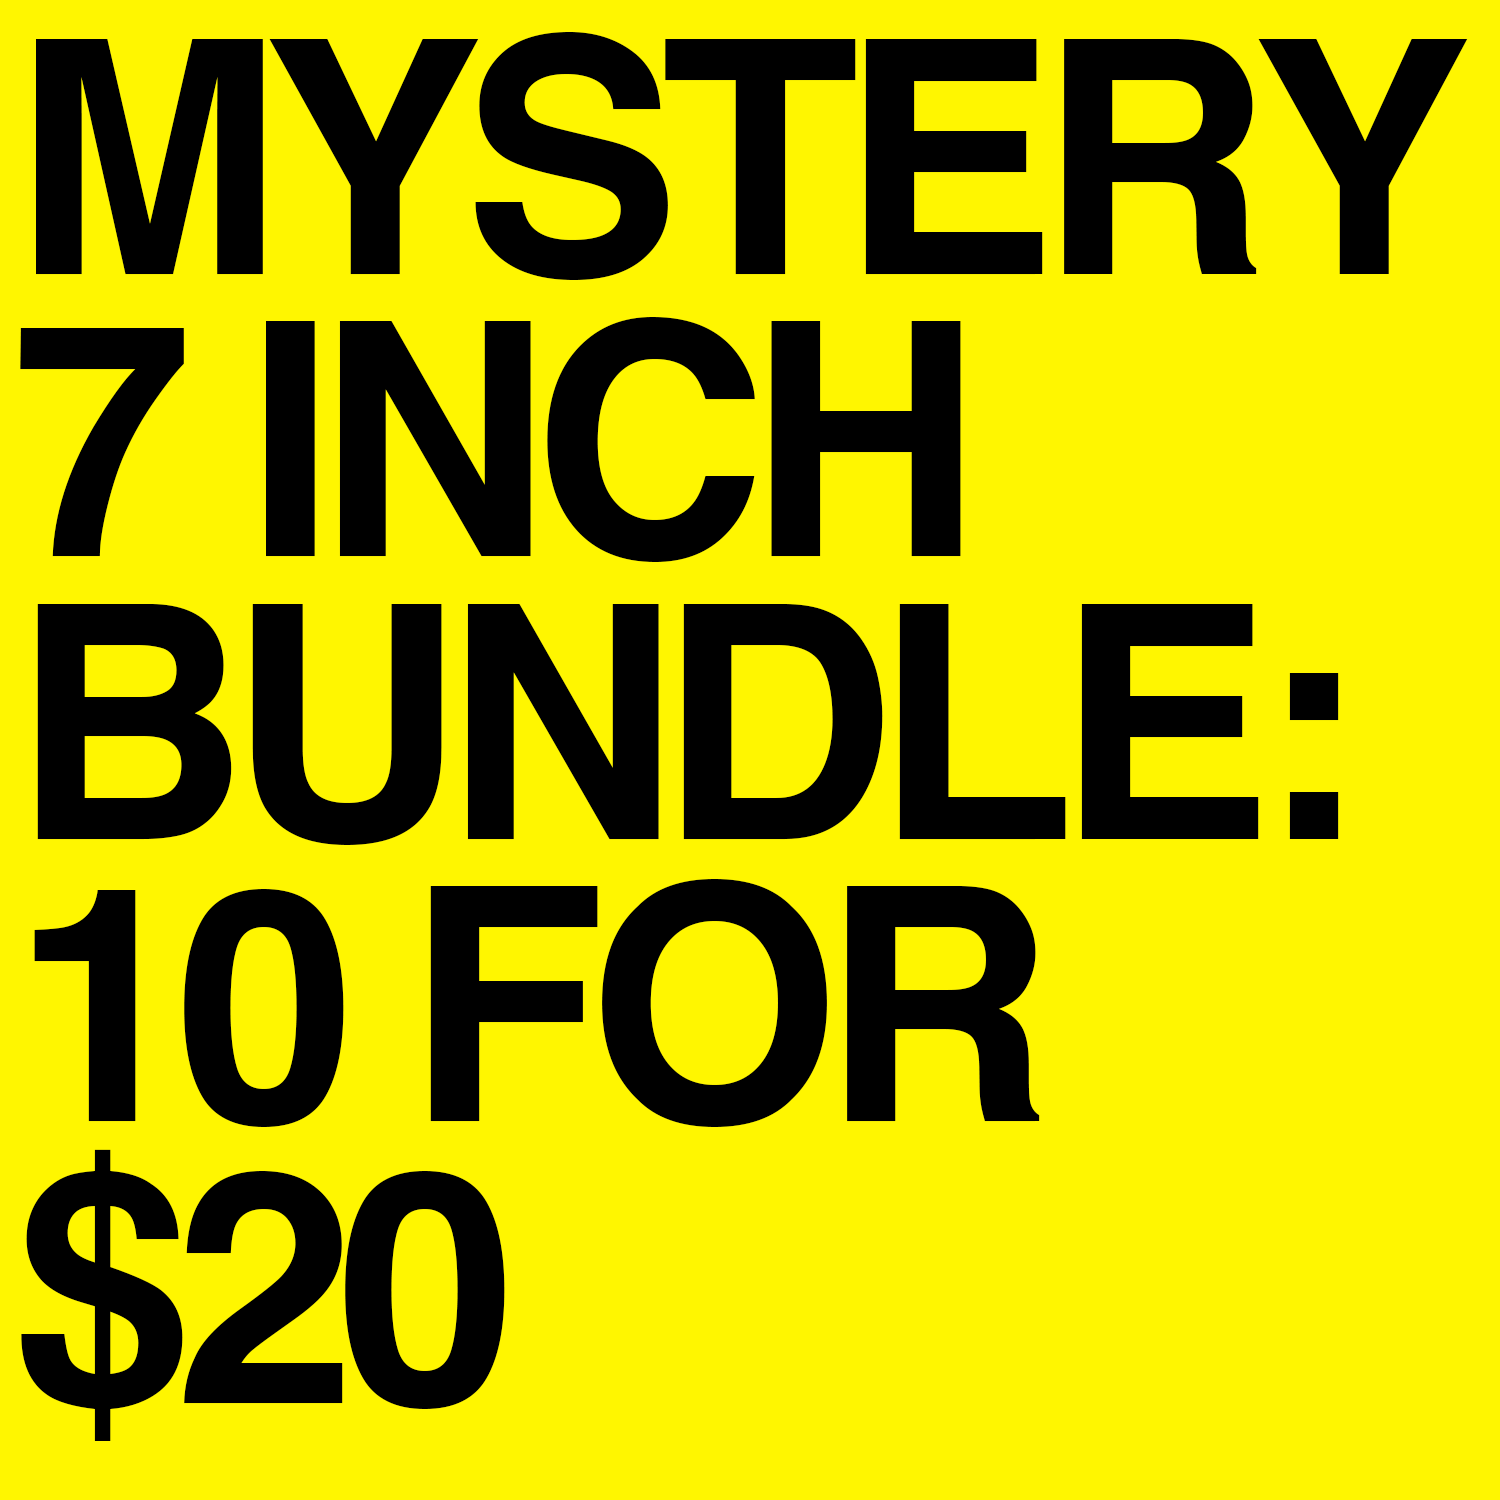 Mystery 7" Vinyl Bundle - 10 for $20